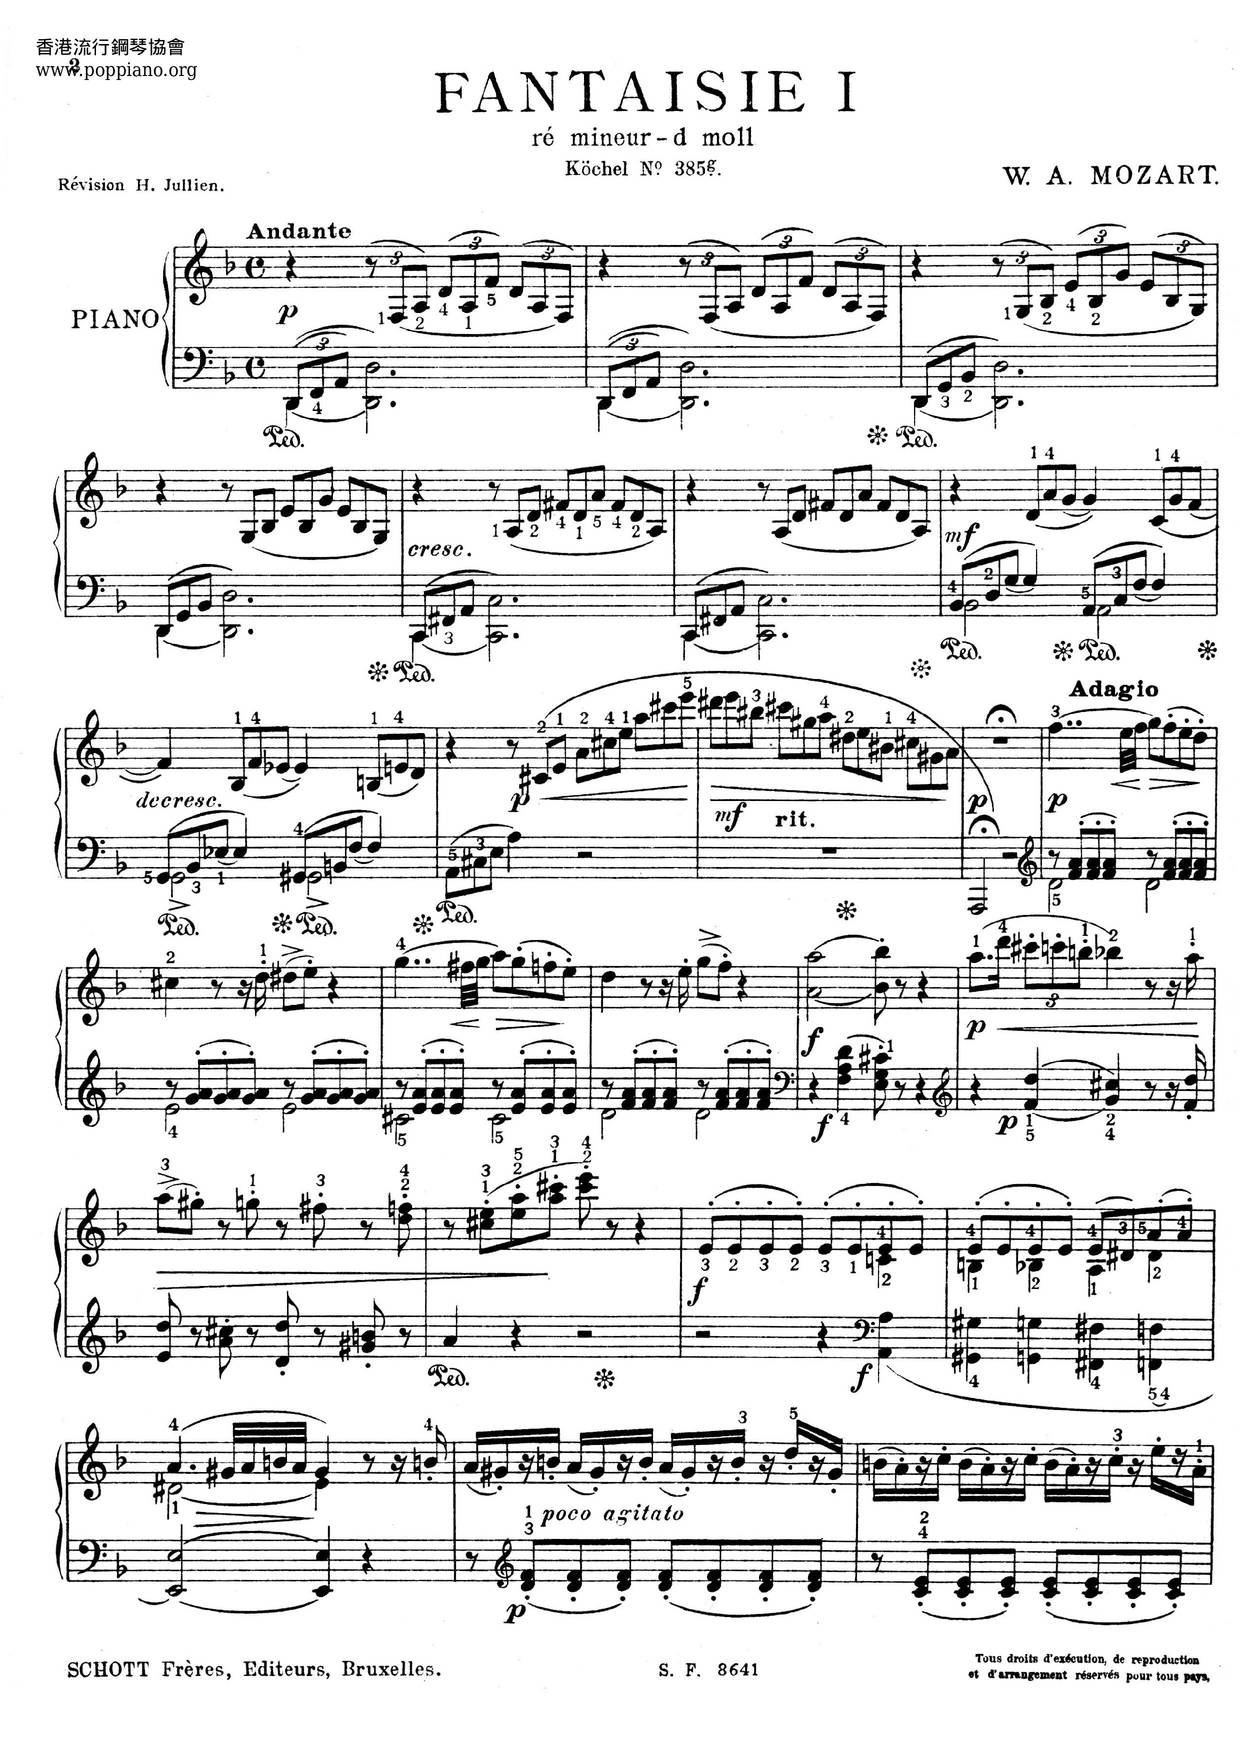 Fantasia In D Minor, K. 397 Score